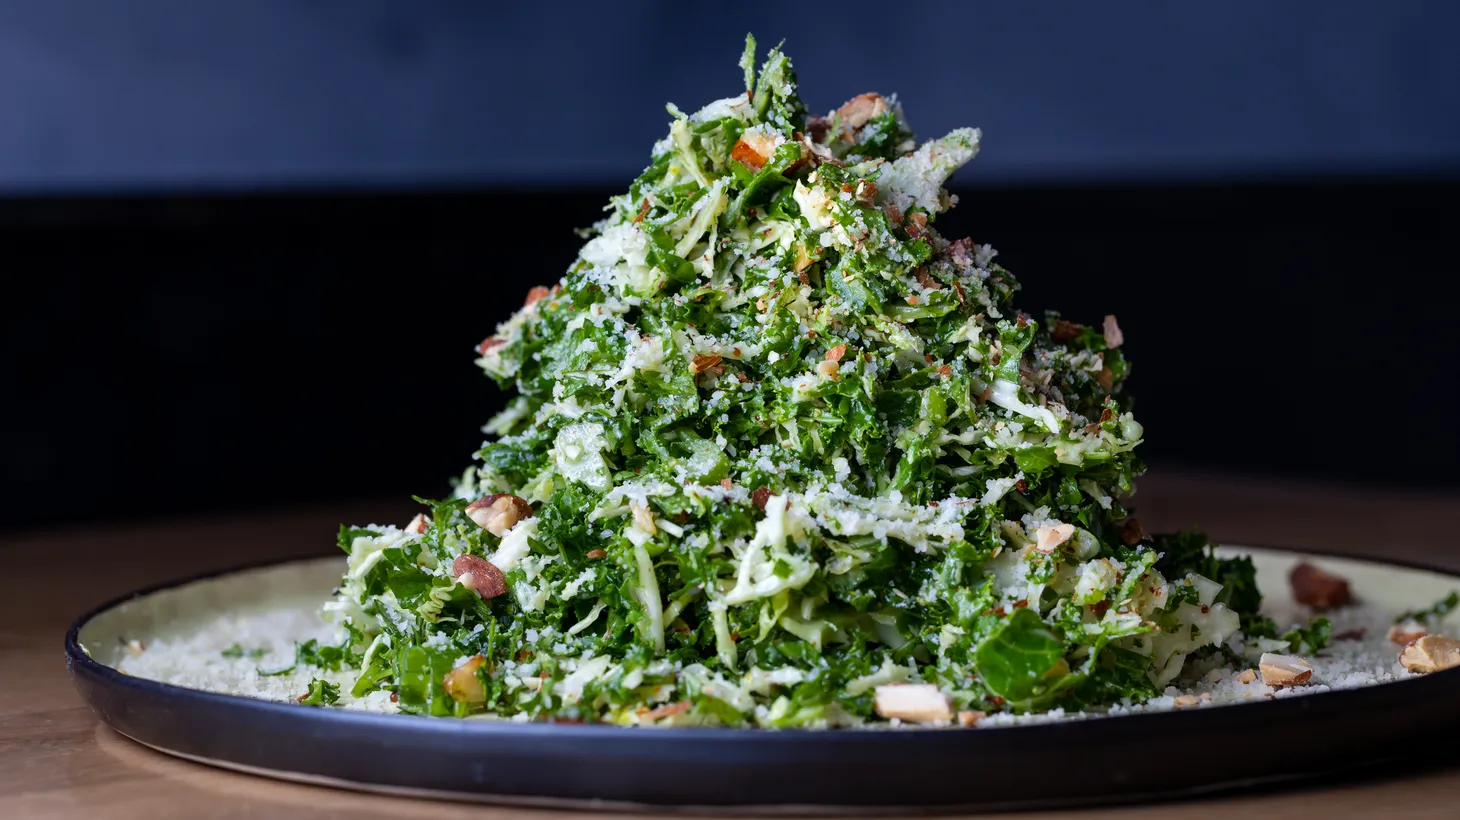 This kale salad features parmigiano, avocado, cilantro, fresh herbs, and sweet-spicy almond vinaigrette from Jame Enoteca in El Segundo.